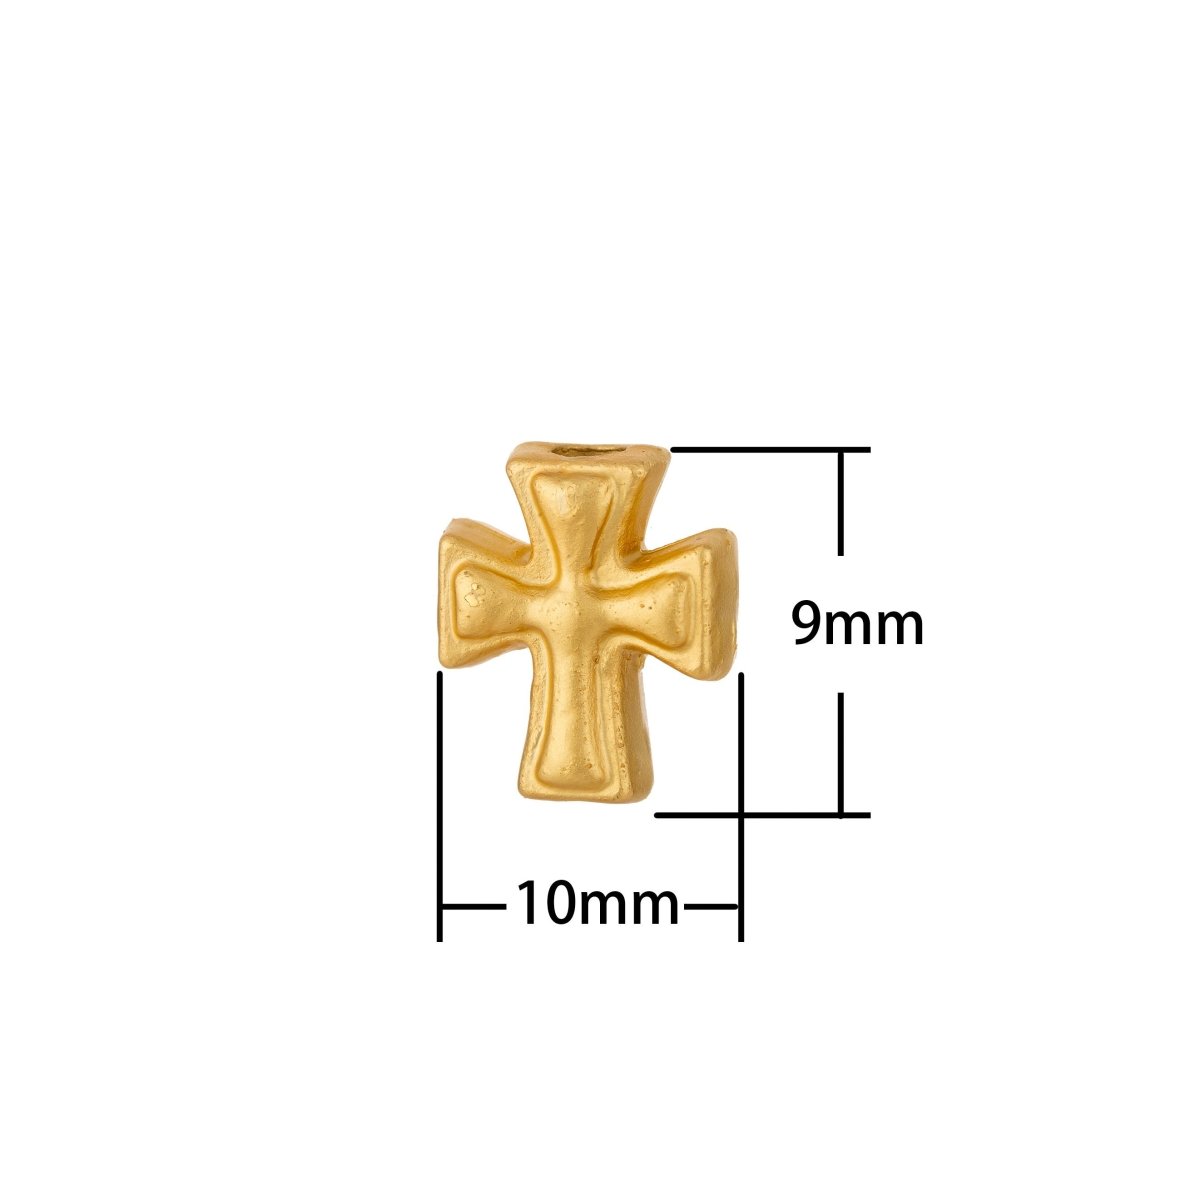 2 Piece - Dainty Matte Gold Cross Charm Christian Jewelry Accessory Religious Bracelet Making Supplies Black Cross Bead Spacer 10x9mm, CL-K082 - DLUXCA